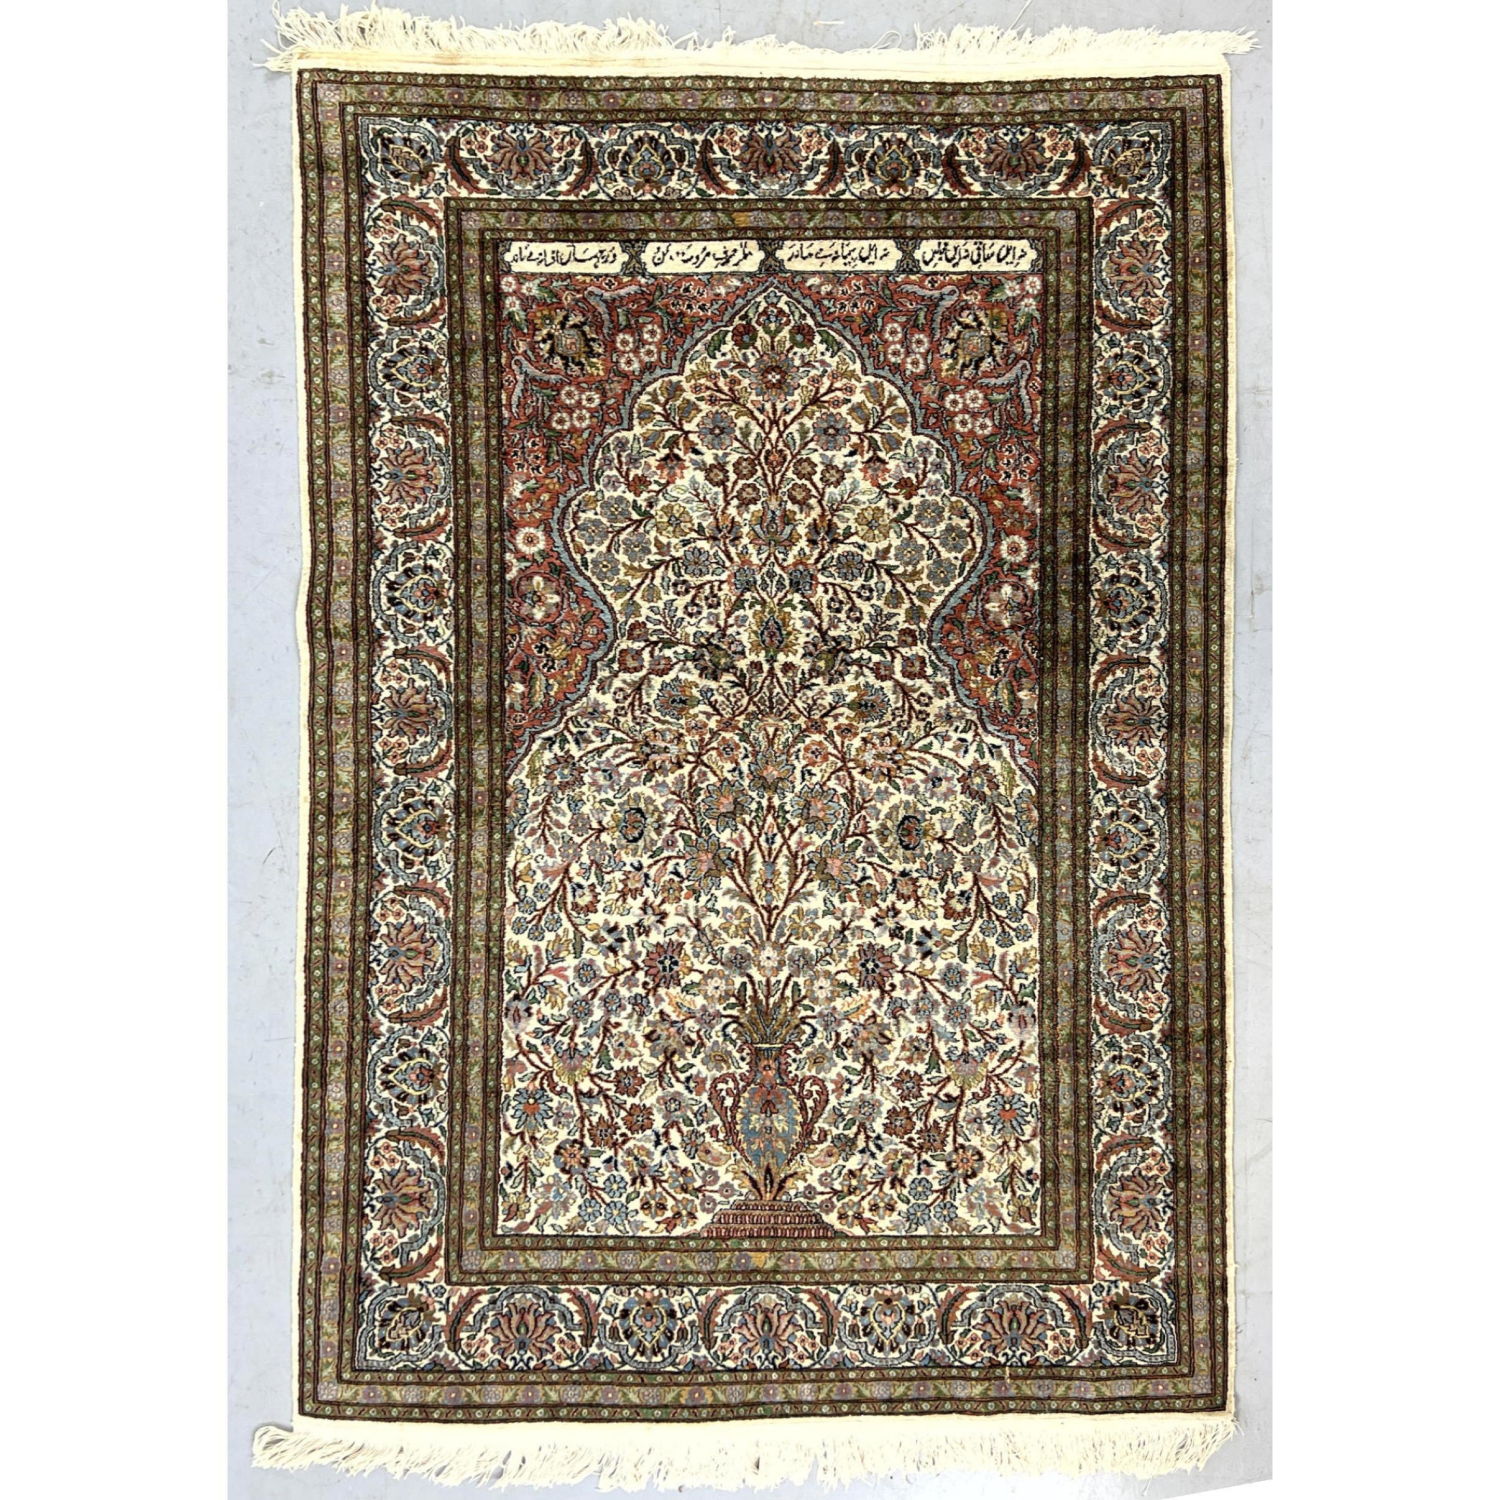 6' x 4' silk hand made prayer rug